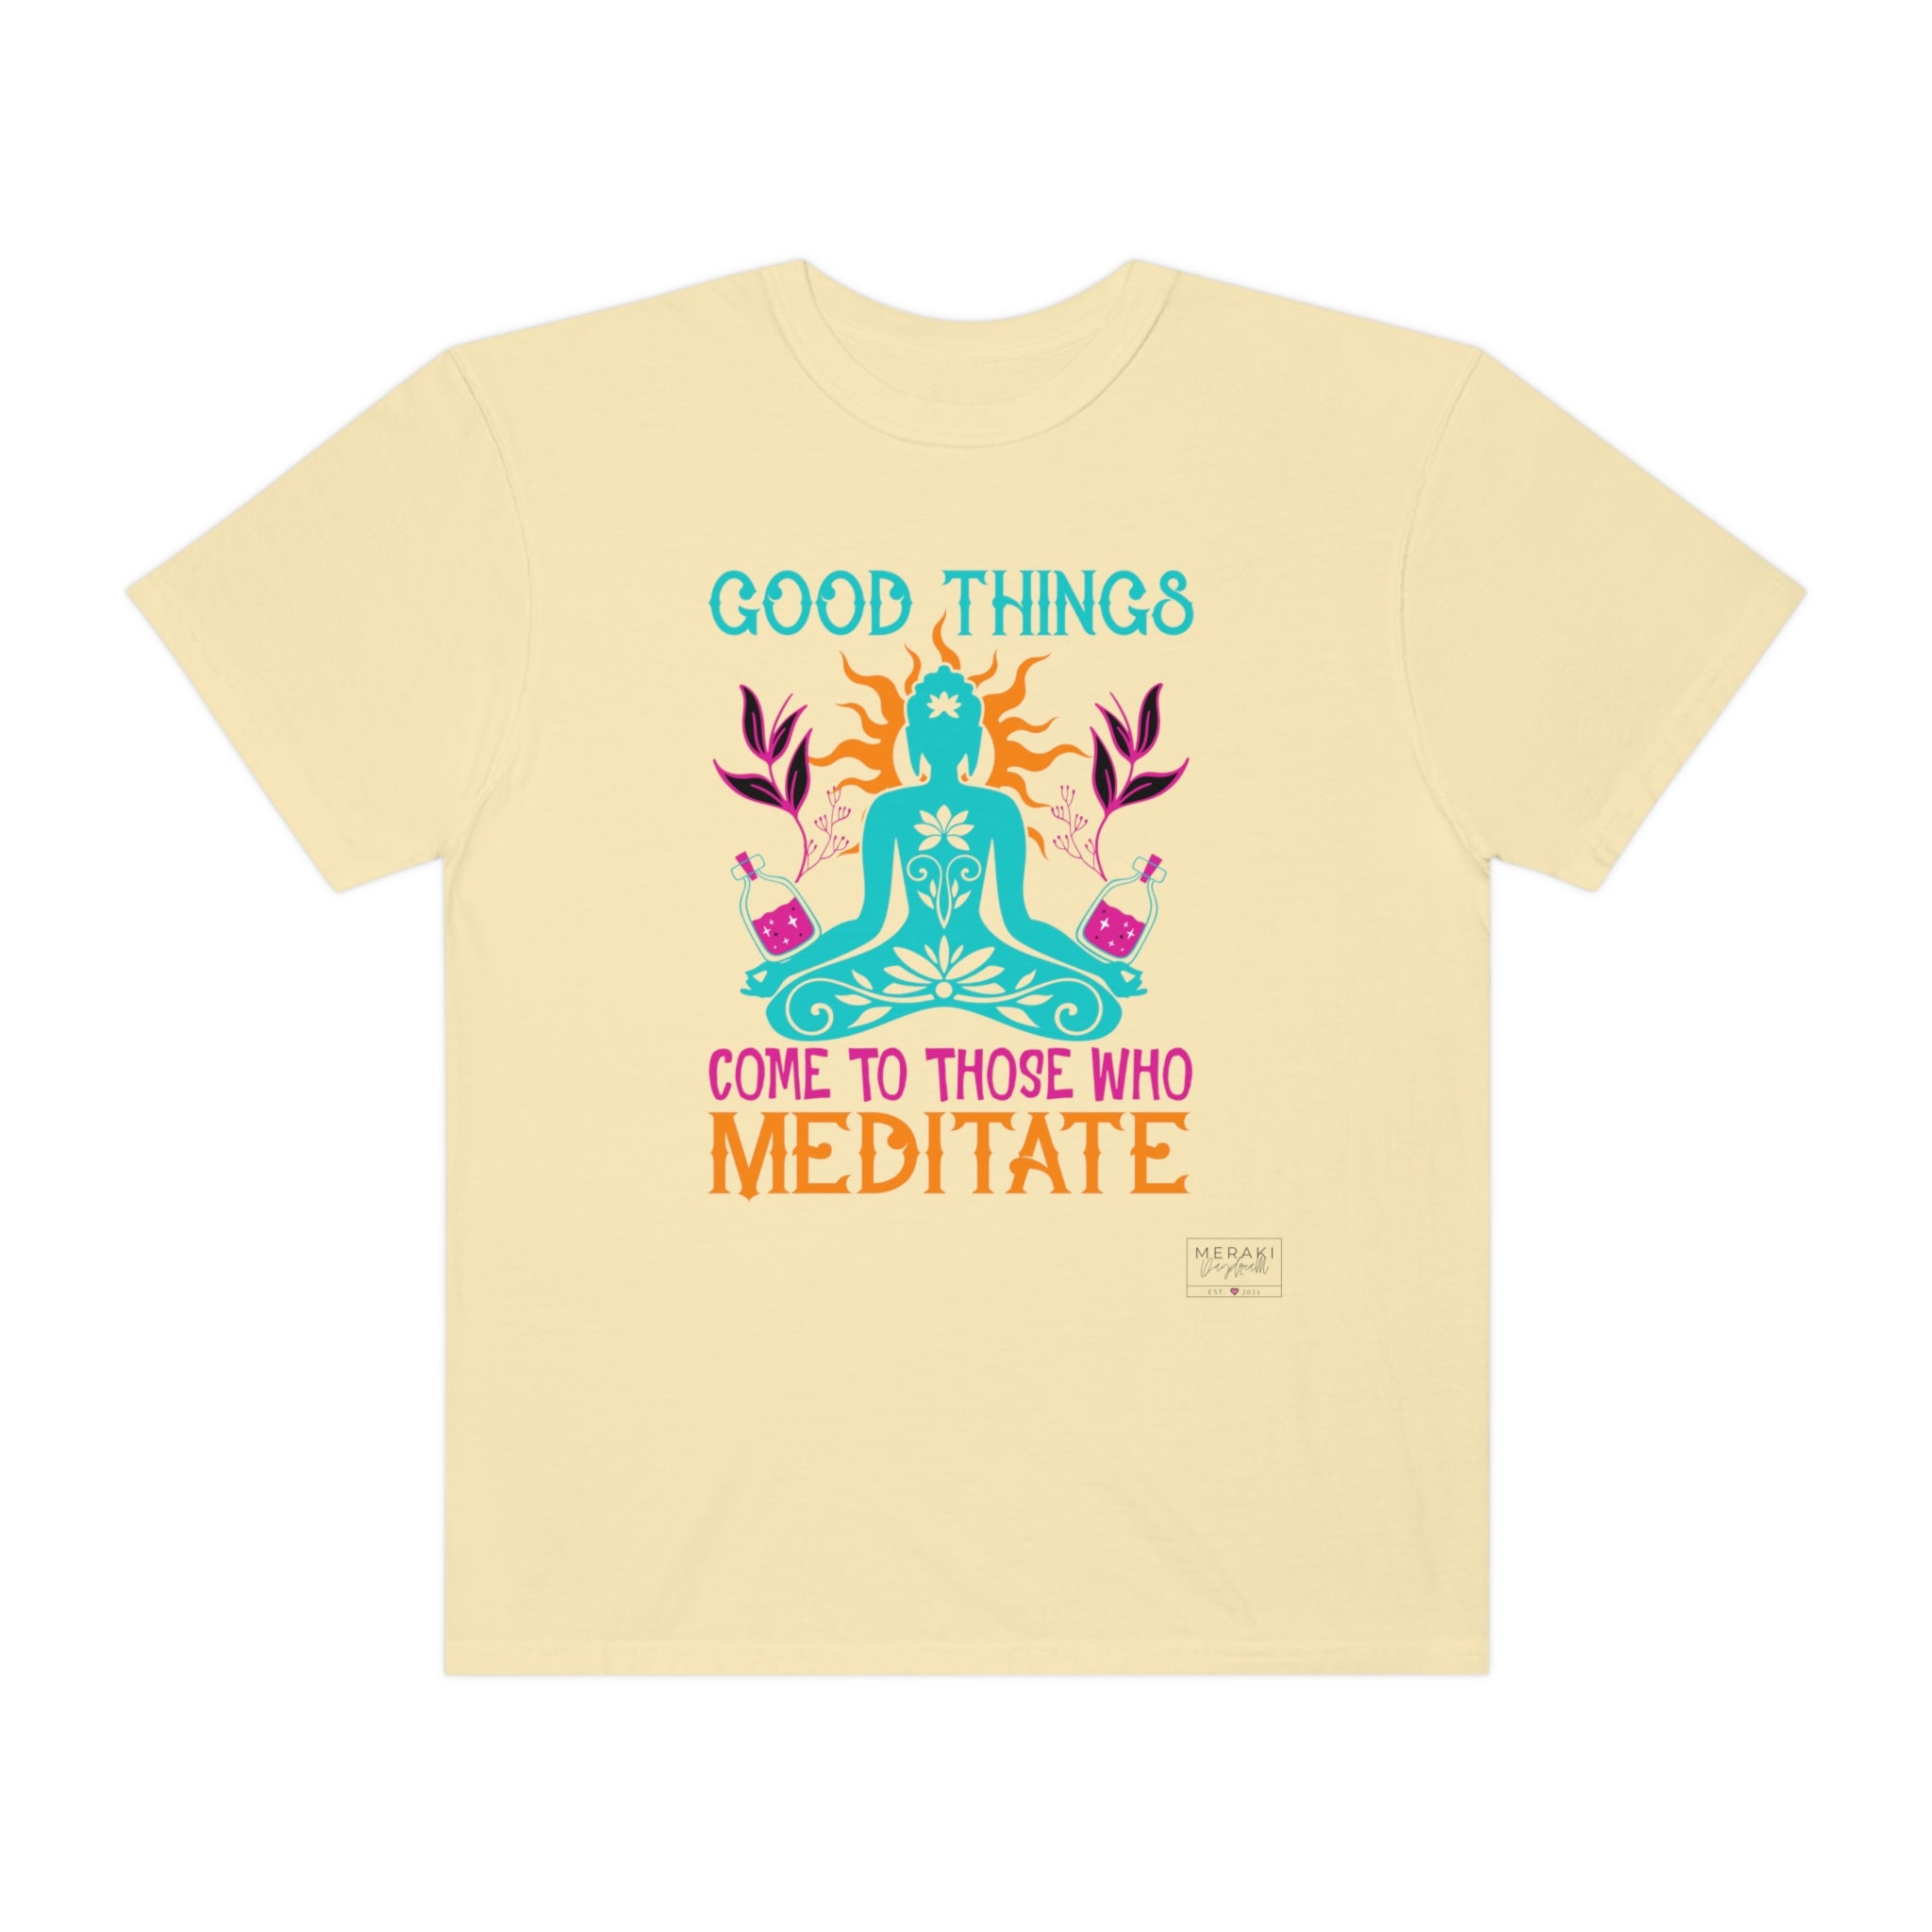 Unisex Meditation T-Shirt